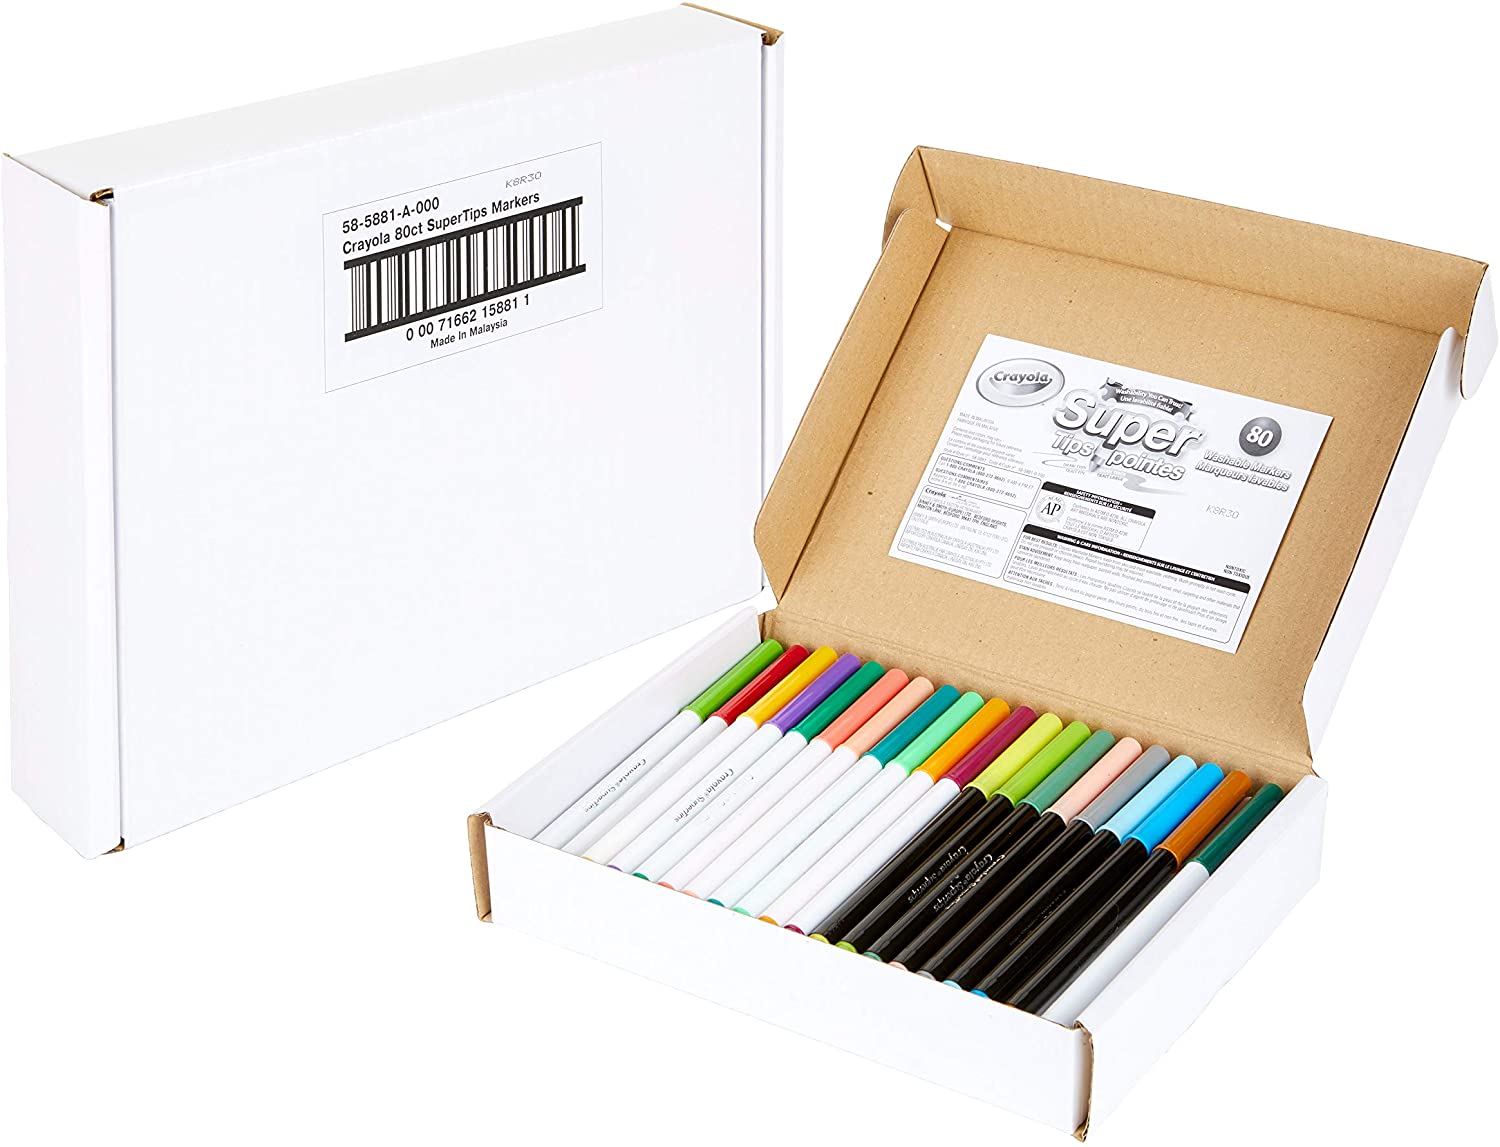 Crayola SuperTips Washable Markers